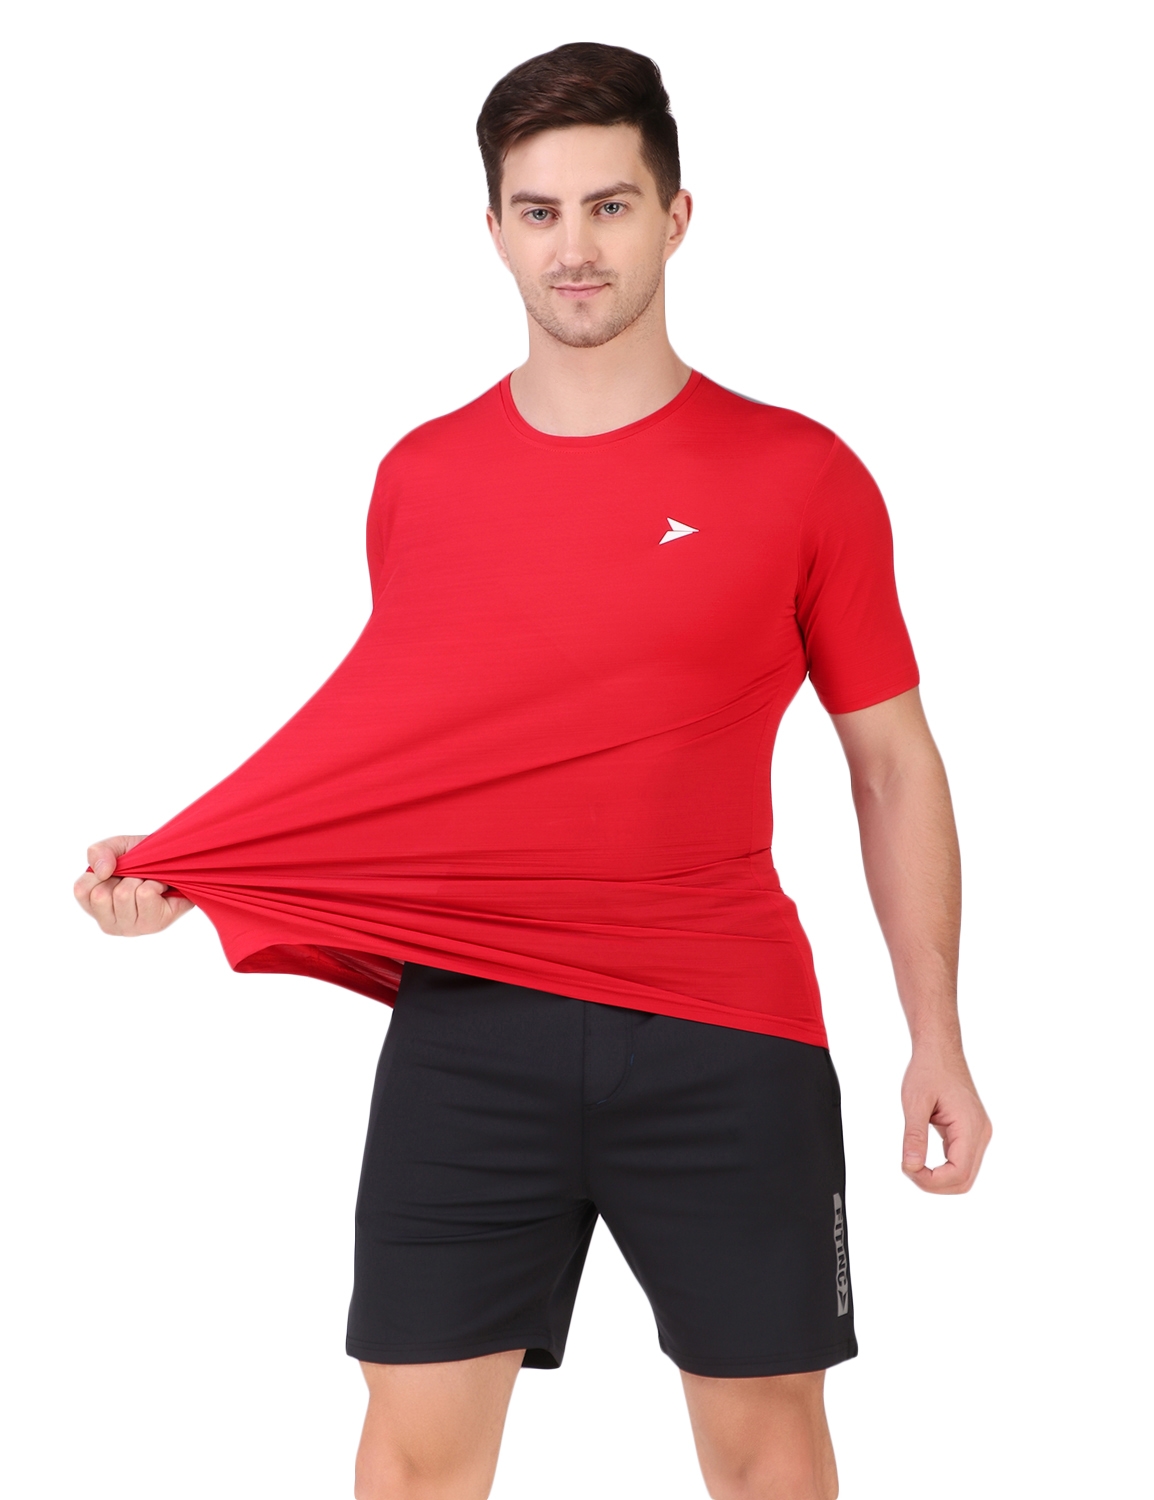 Fitinc | Fitinc Men's Round Neck Slimfit Gym & Active Sports Red T-Shirt 3